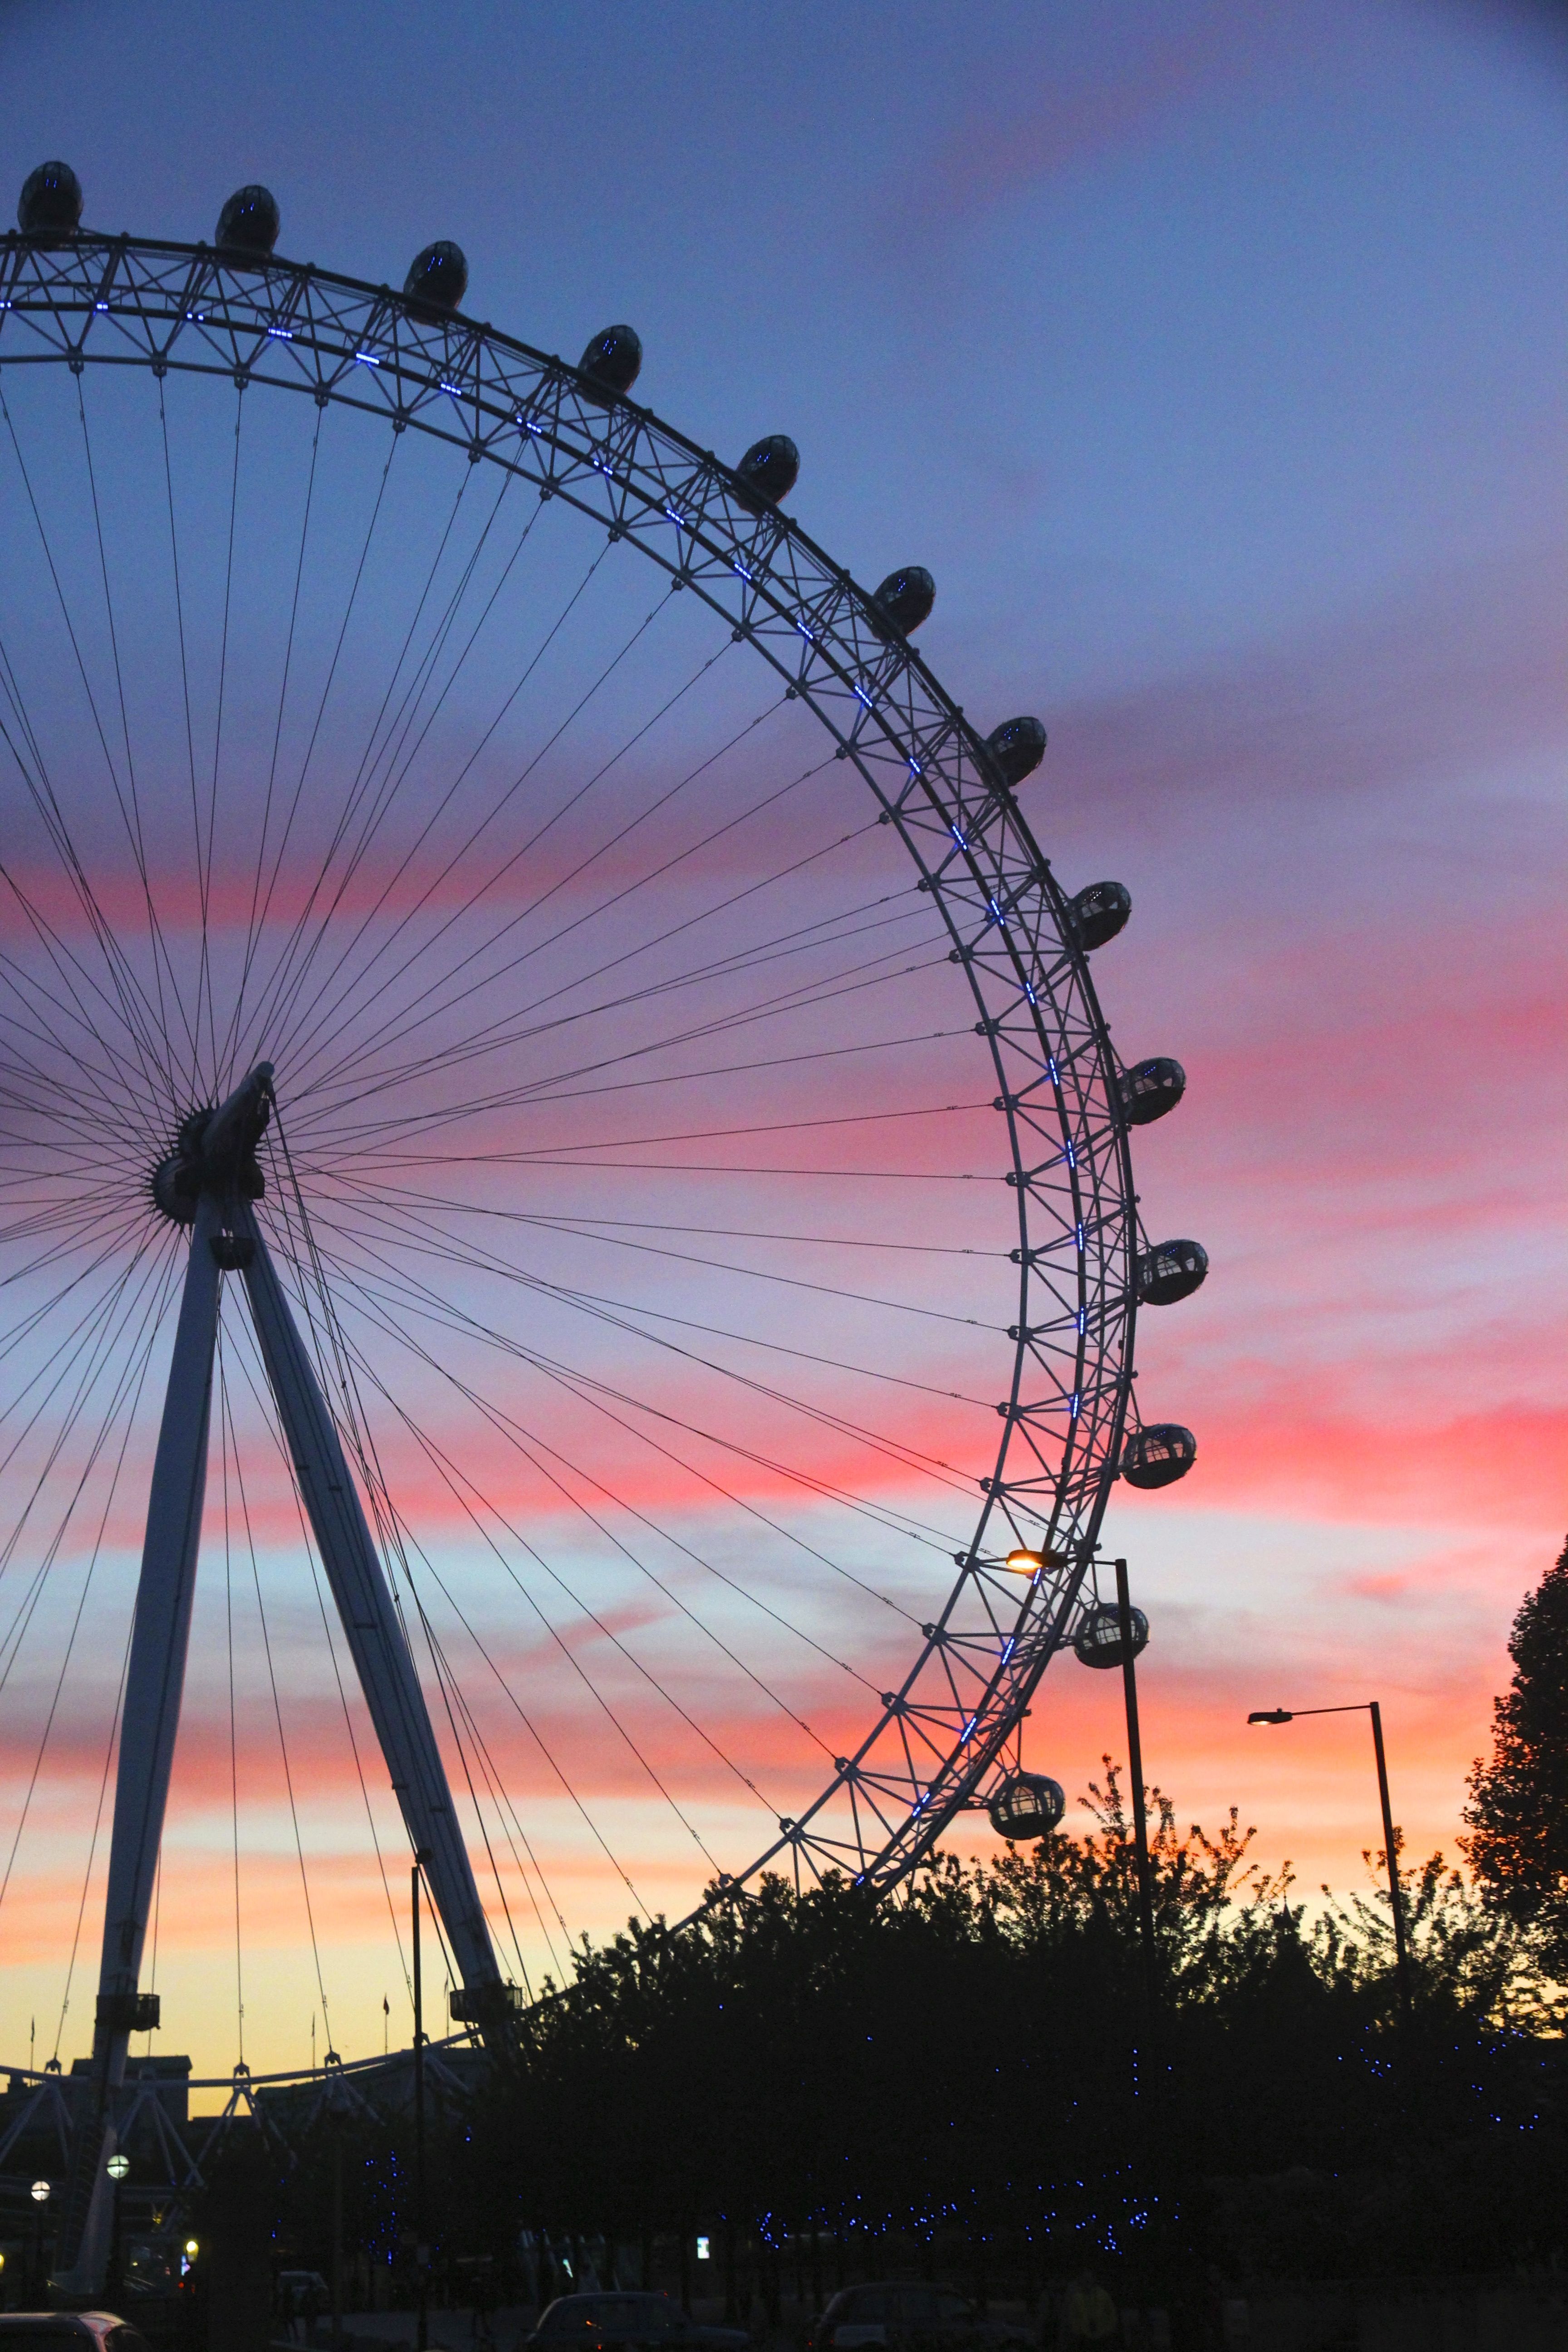 London Eye this summer!. Eyes wallpaper, Sky aesthetic, Photo background image